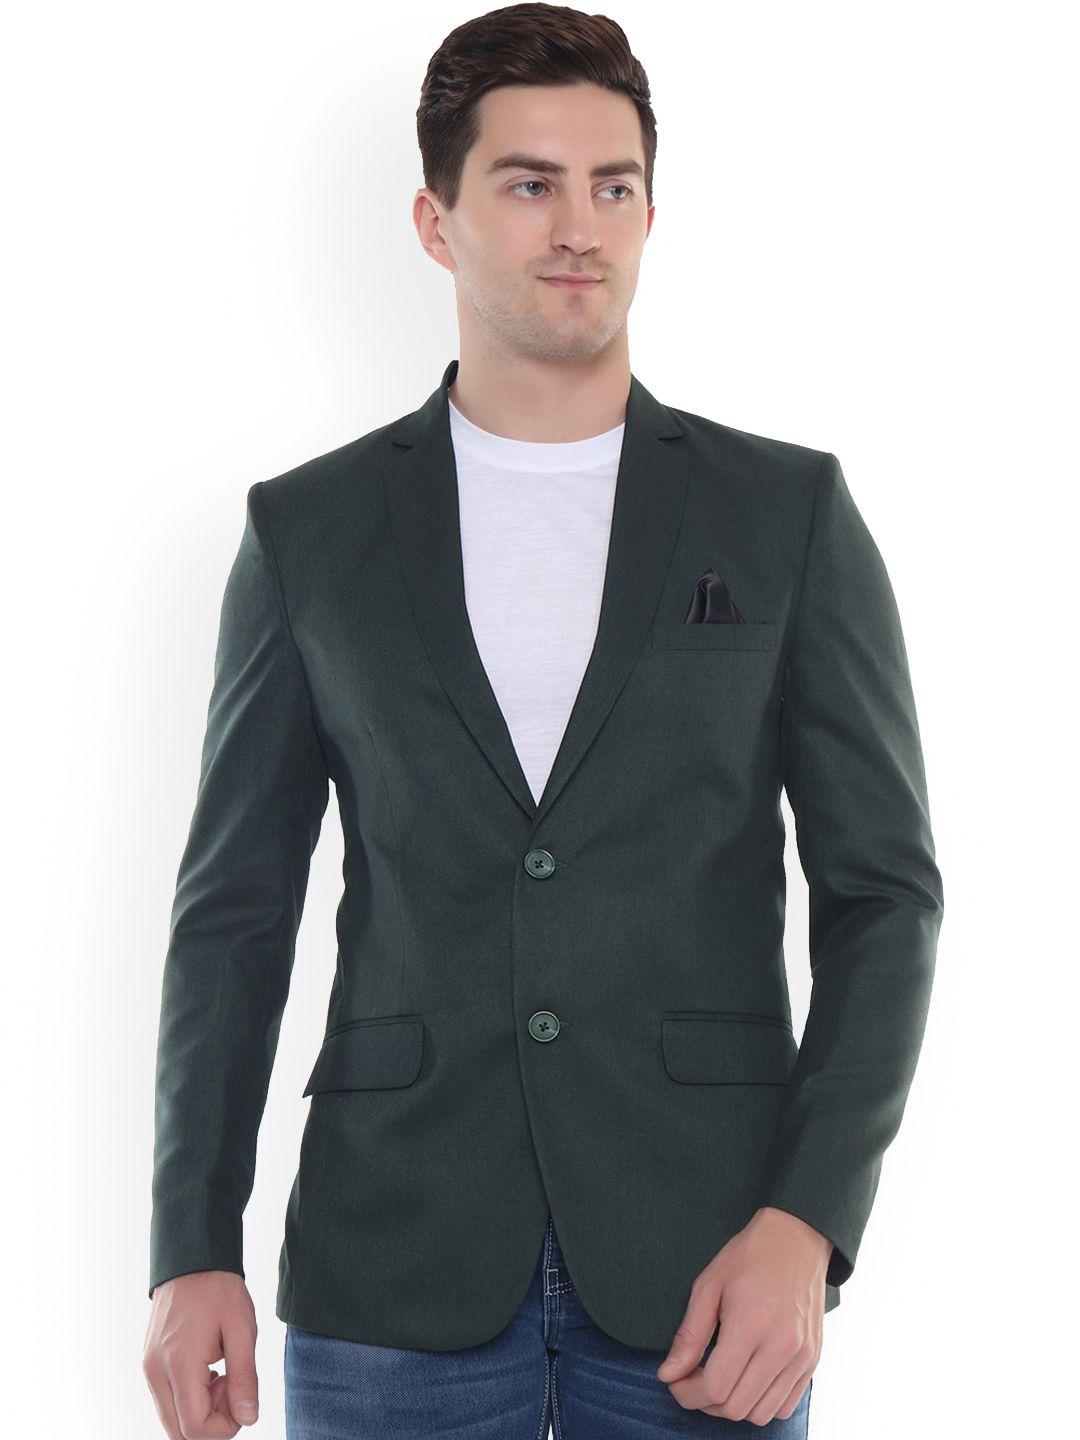 dkgf-fashion-men-green-solid-cotton-blend-blazer